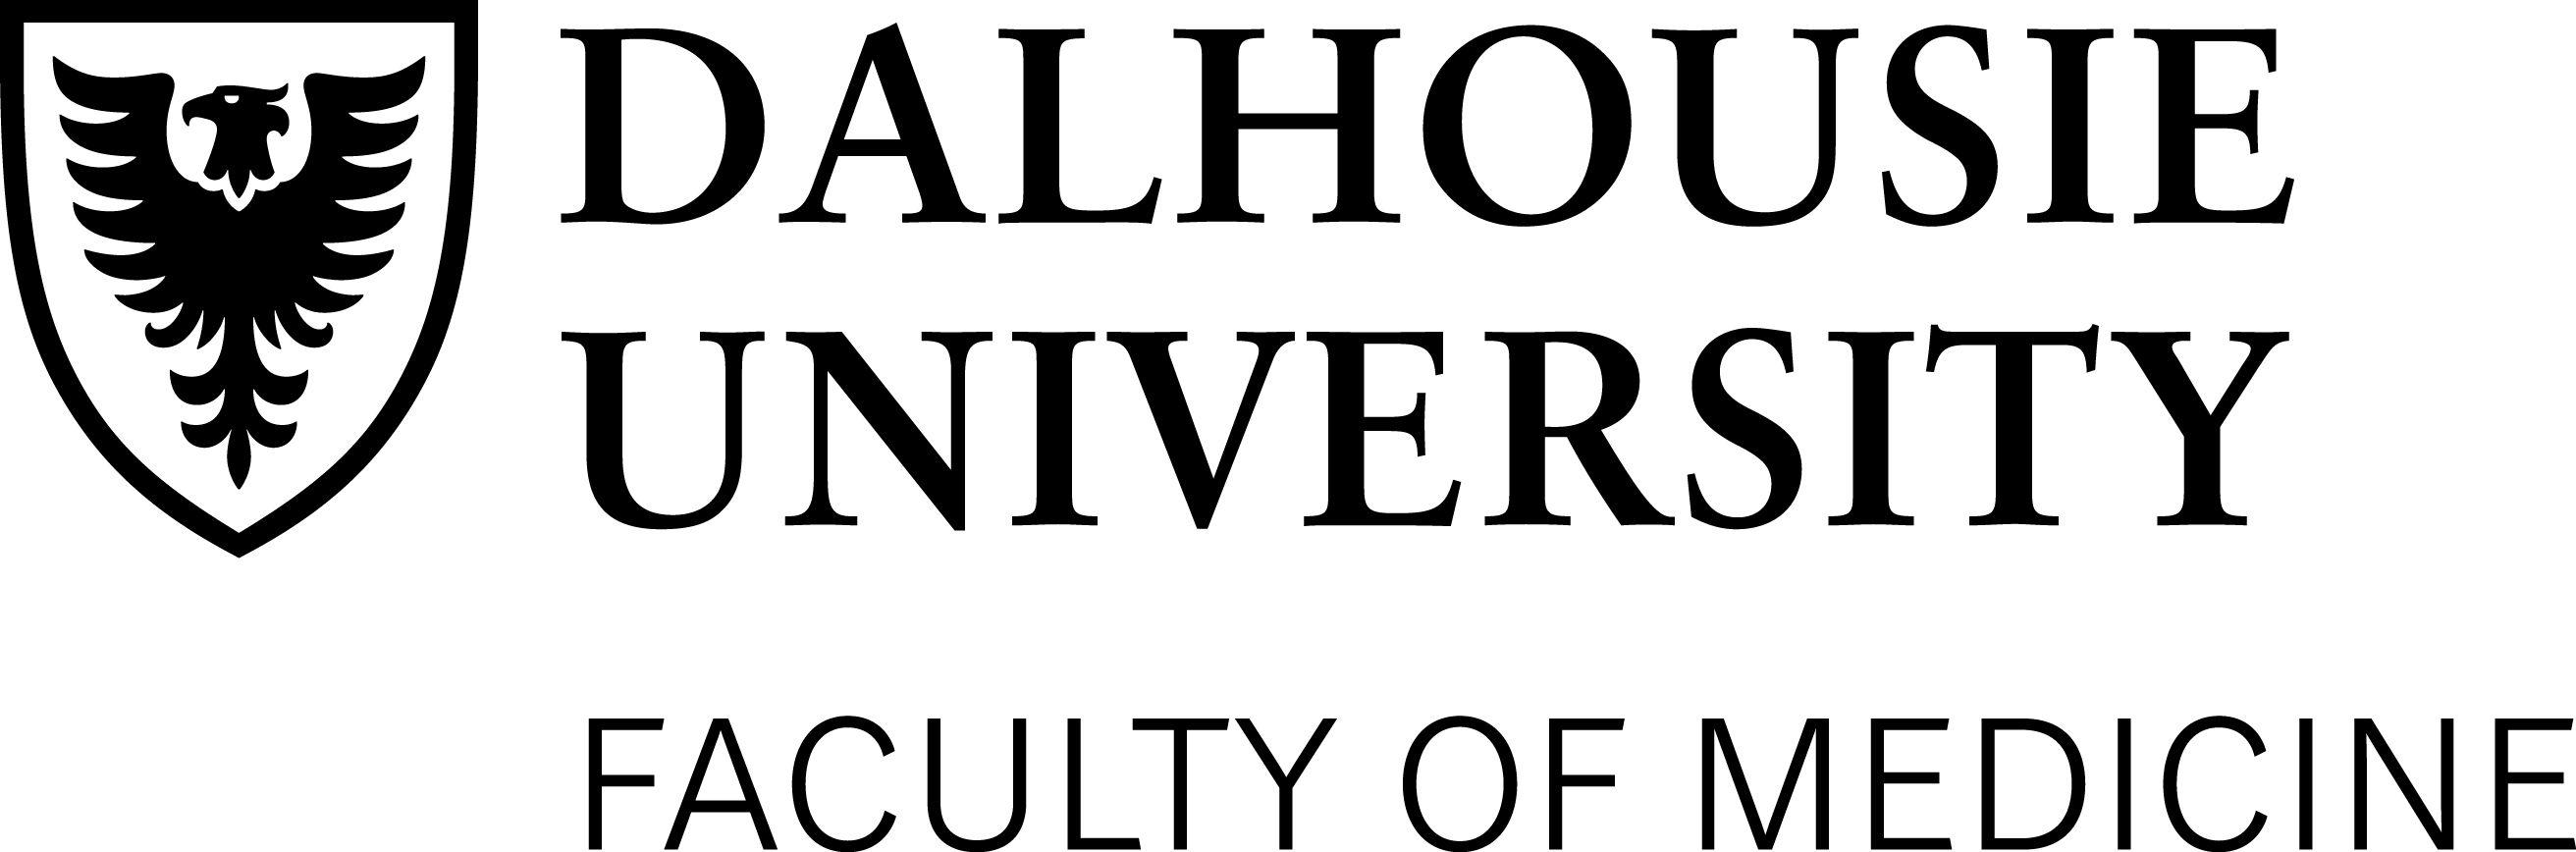 Faculty Logo - Download logos - Faculty of Medicine - Dalhousie University